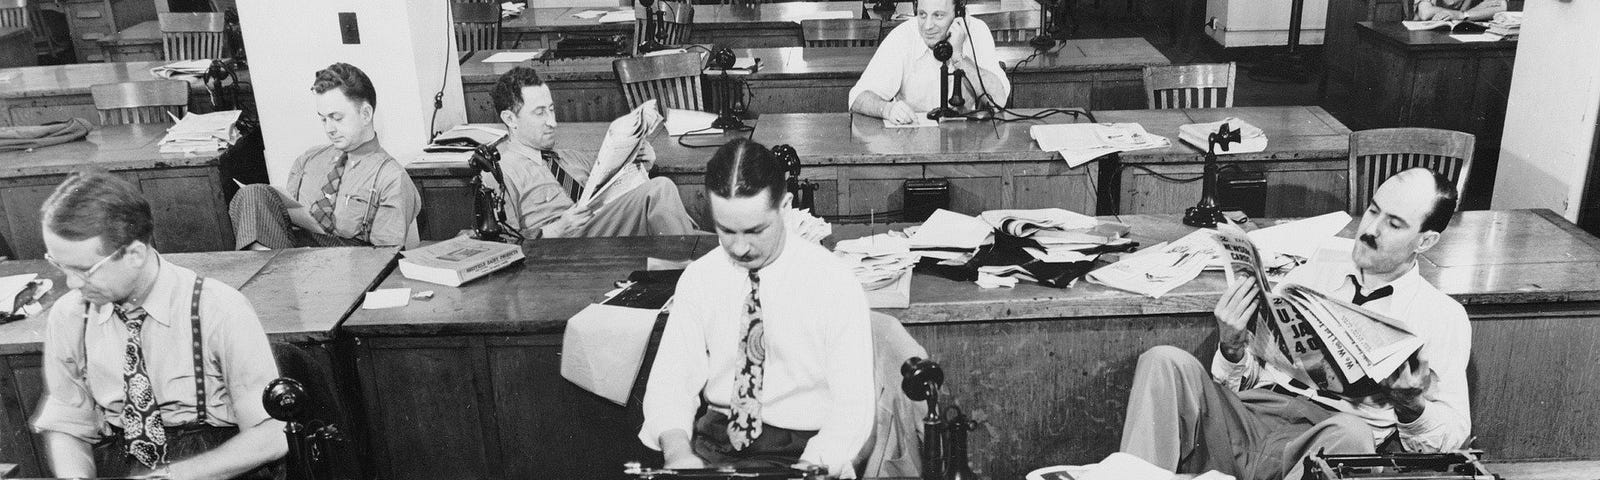 Black and white image of vintage newsroom